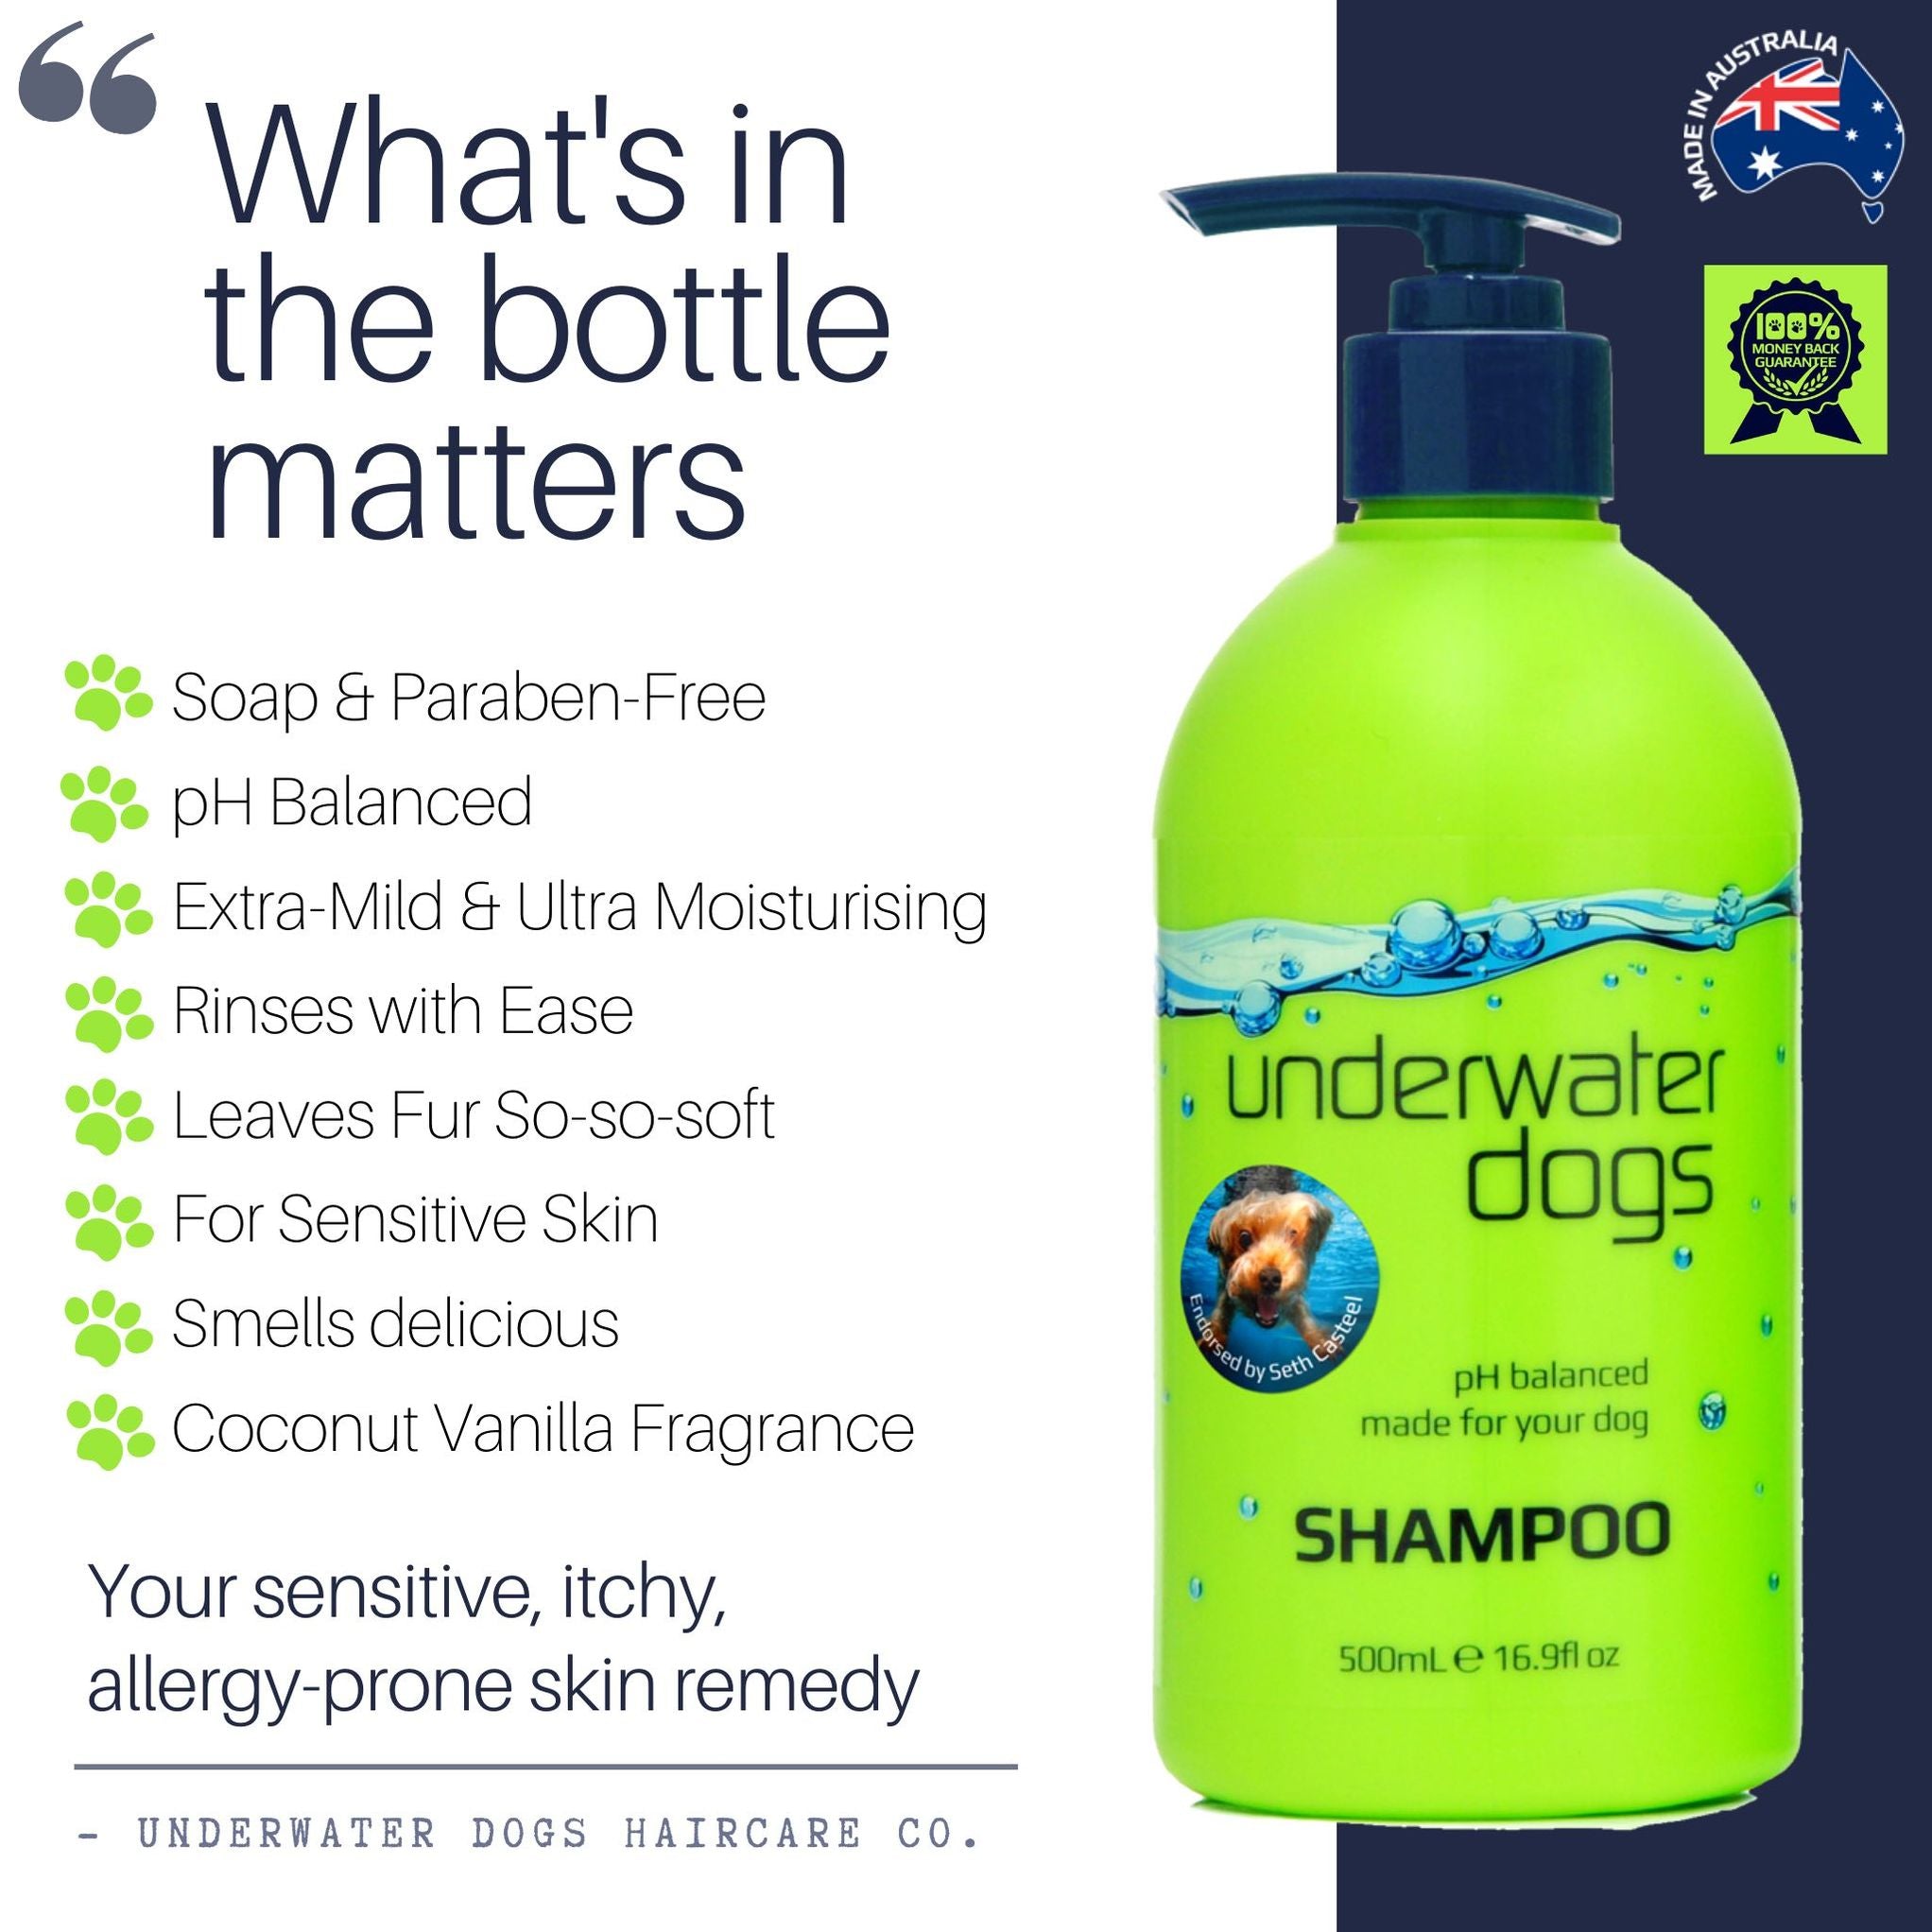 UNDERWATER DOGS - Dog Shampoo 500mL